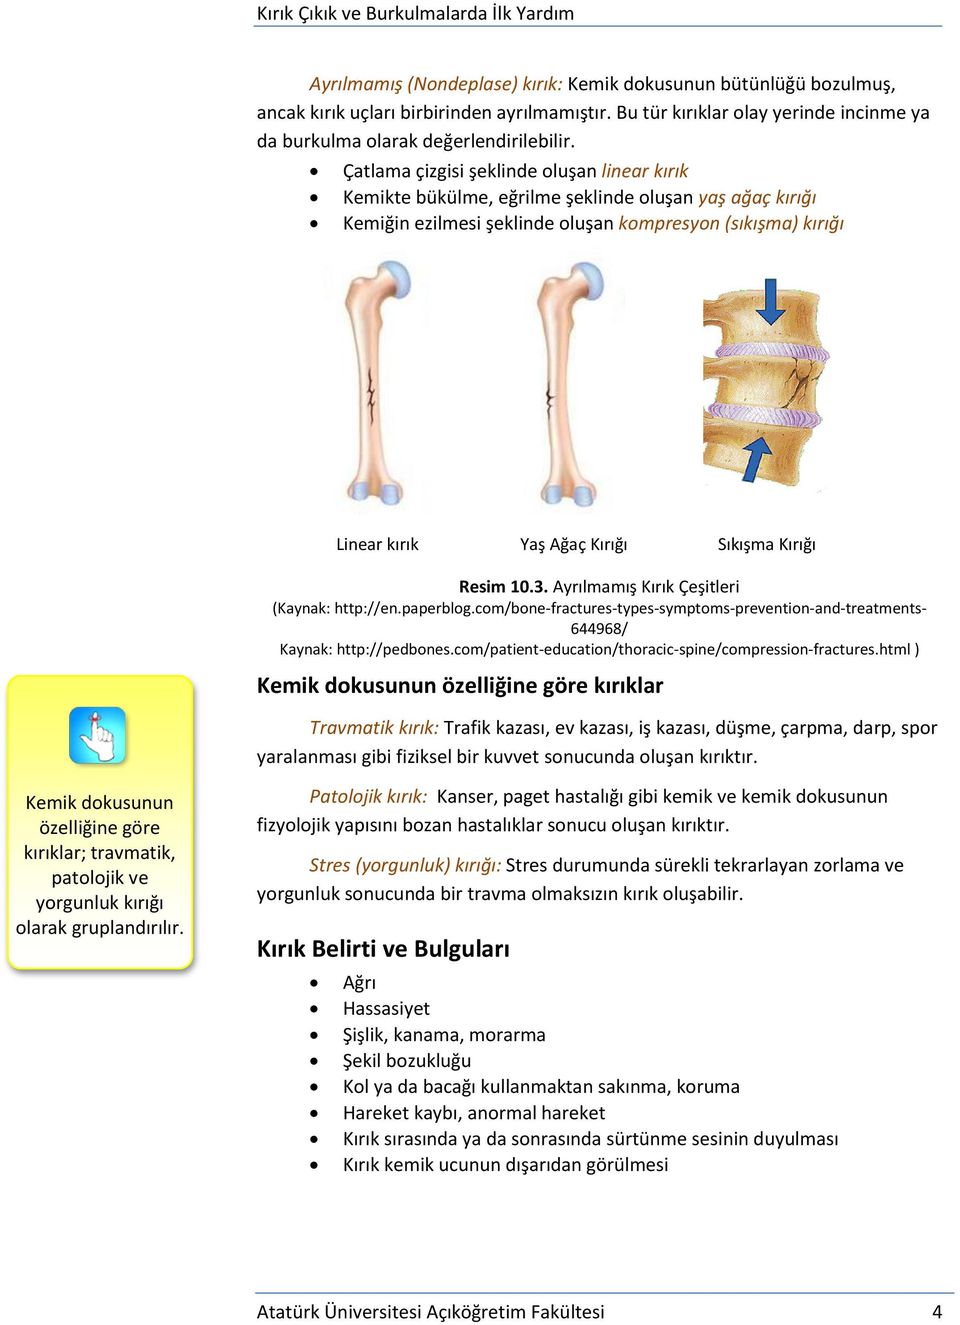 Kırığı Resim 10.3. Ayrılmamış Kırık Çeşitleri (Kaynak: http://en.paperblog.com/bone-fractures-types-symptoms-prevention-and-treatments- 644968/ Kaynak: http://pedbones.